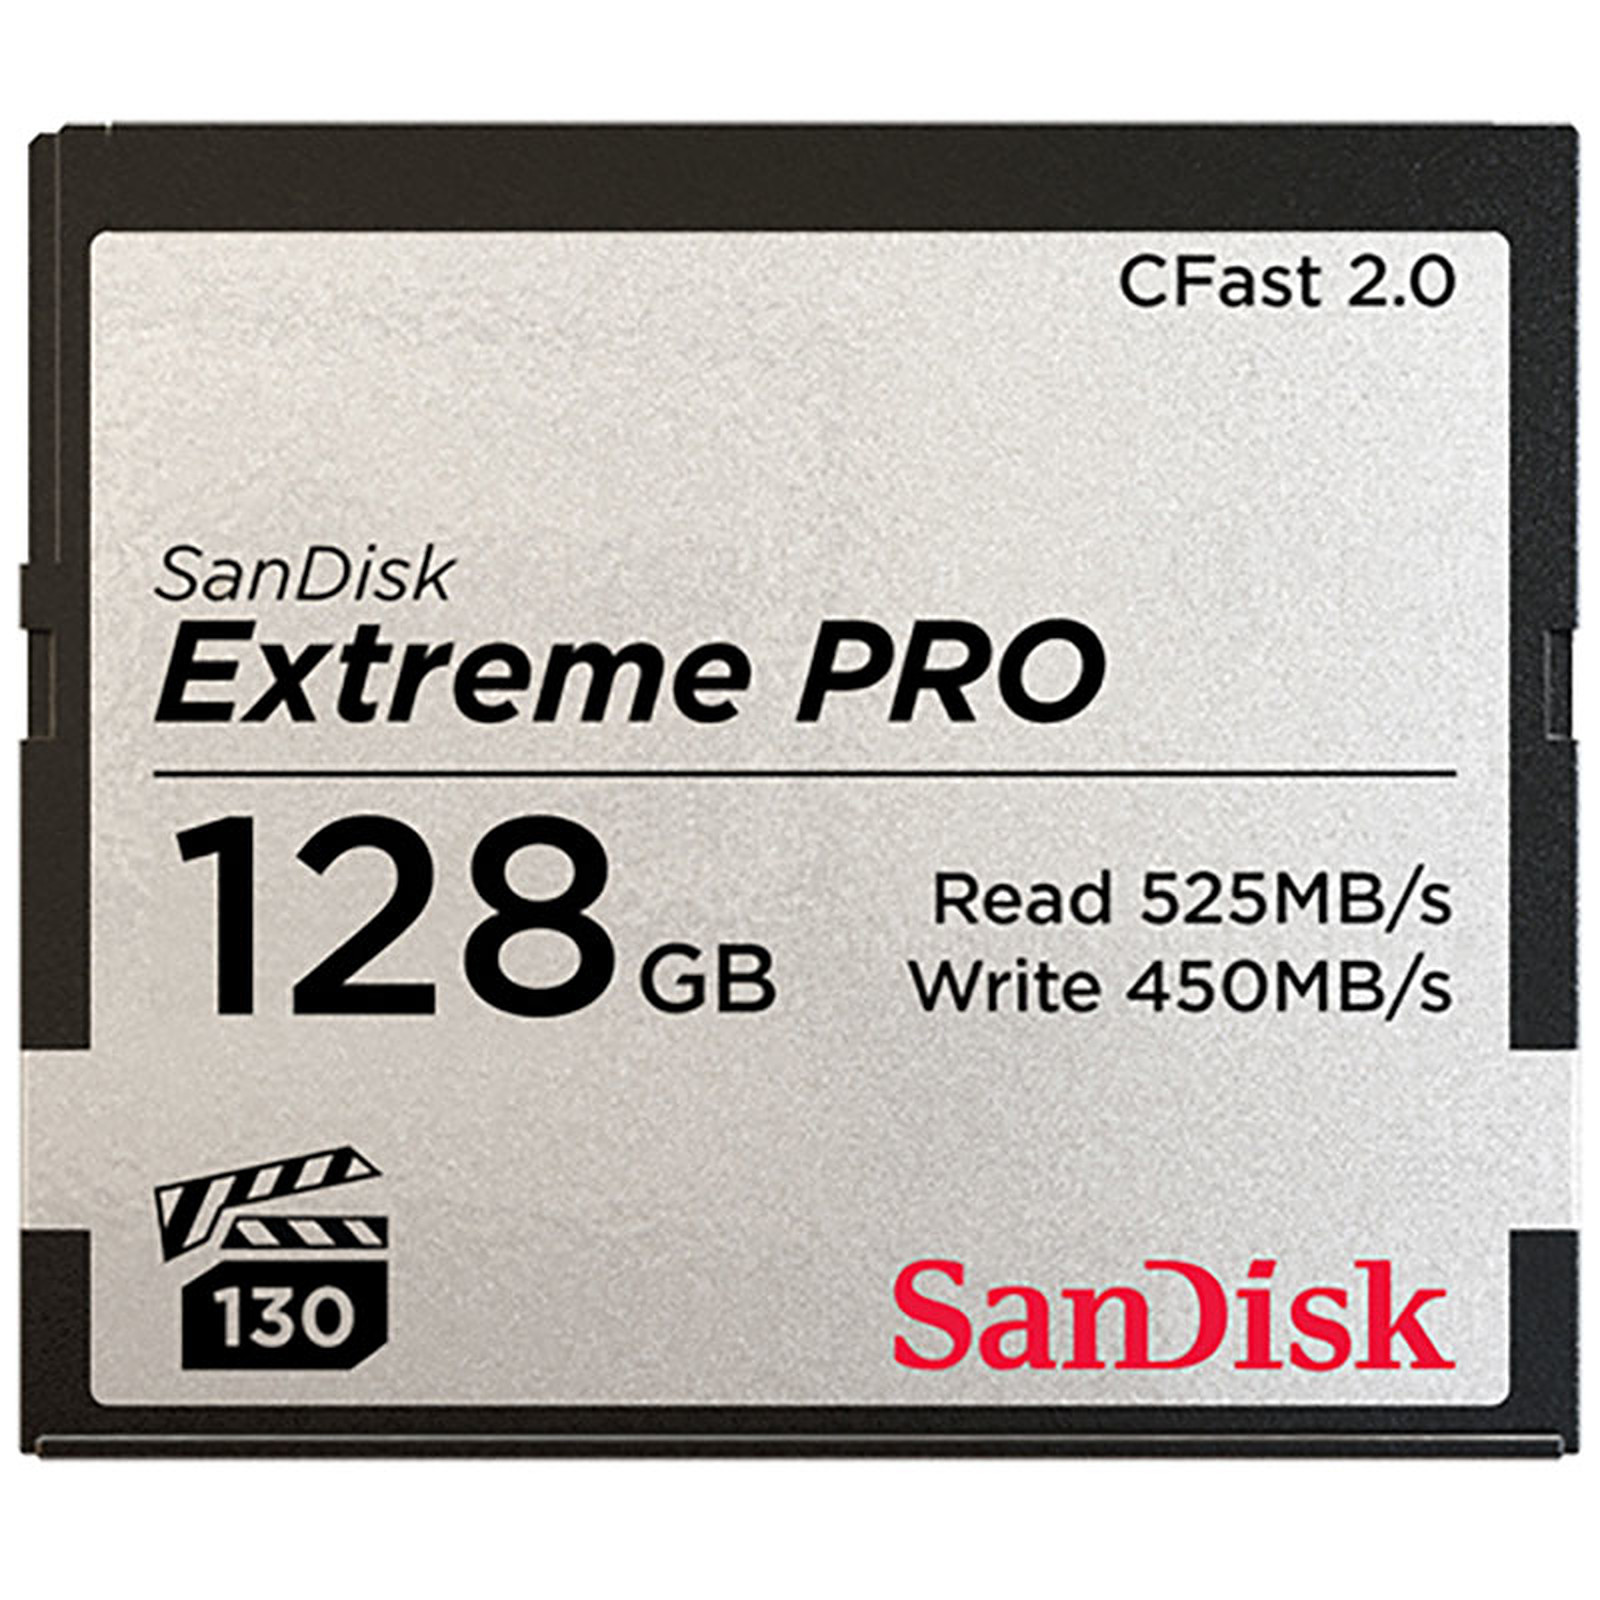 SanDisk Carte memoire Extreme Pro CompactFlash CFast 2.0 128 Go - Carte memoire Sandisk